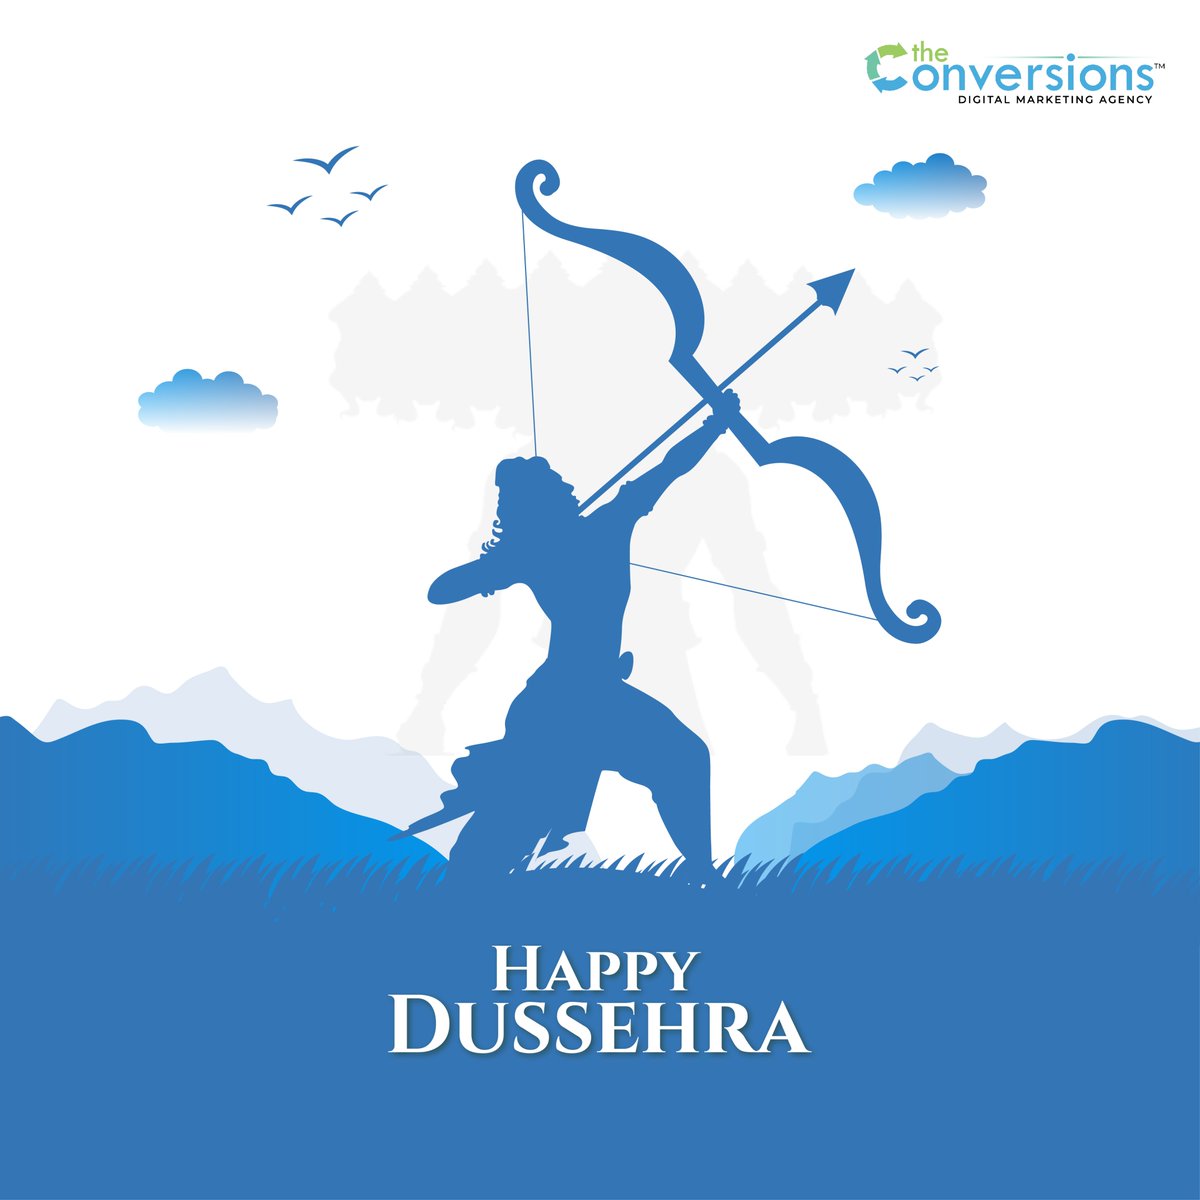 Happy Dussehra Everyone!! 😊

#happydussehra #vijaydashmi #branding #webdevelopment #theconversions #digital #digitalmarketing #socialmediamarketing #socialmedia #trending #digitalmarketingagency #wearestorytellers #bhopal